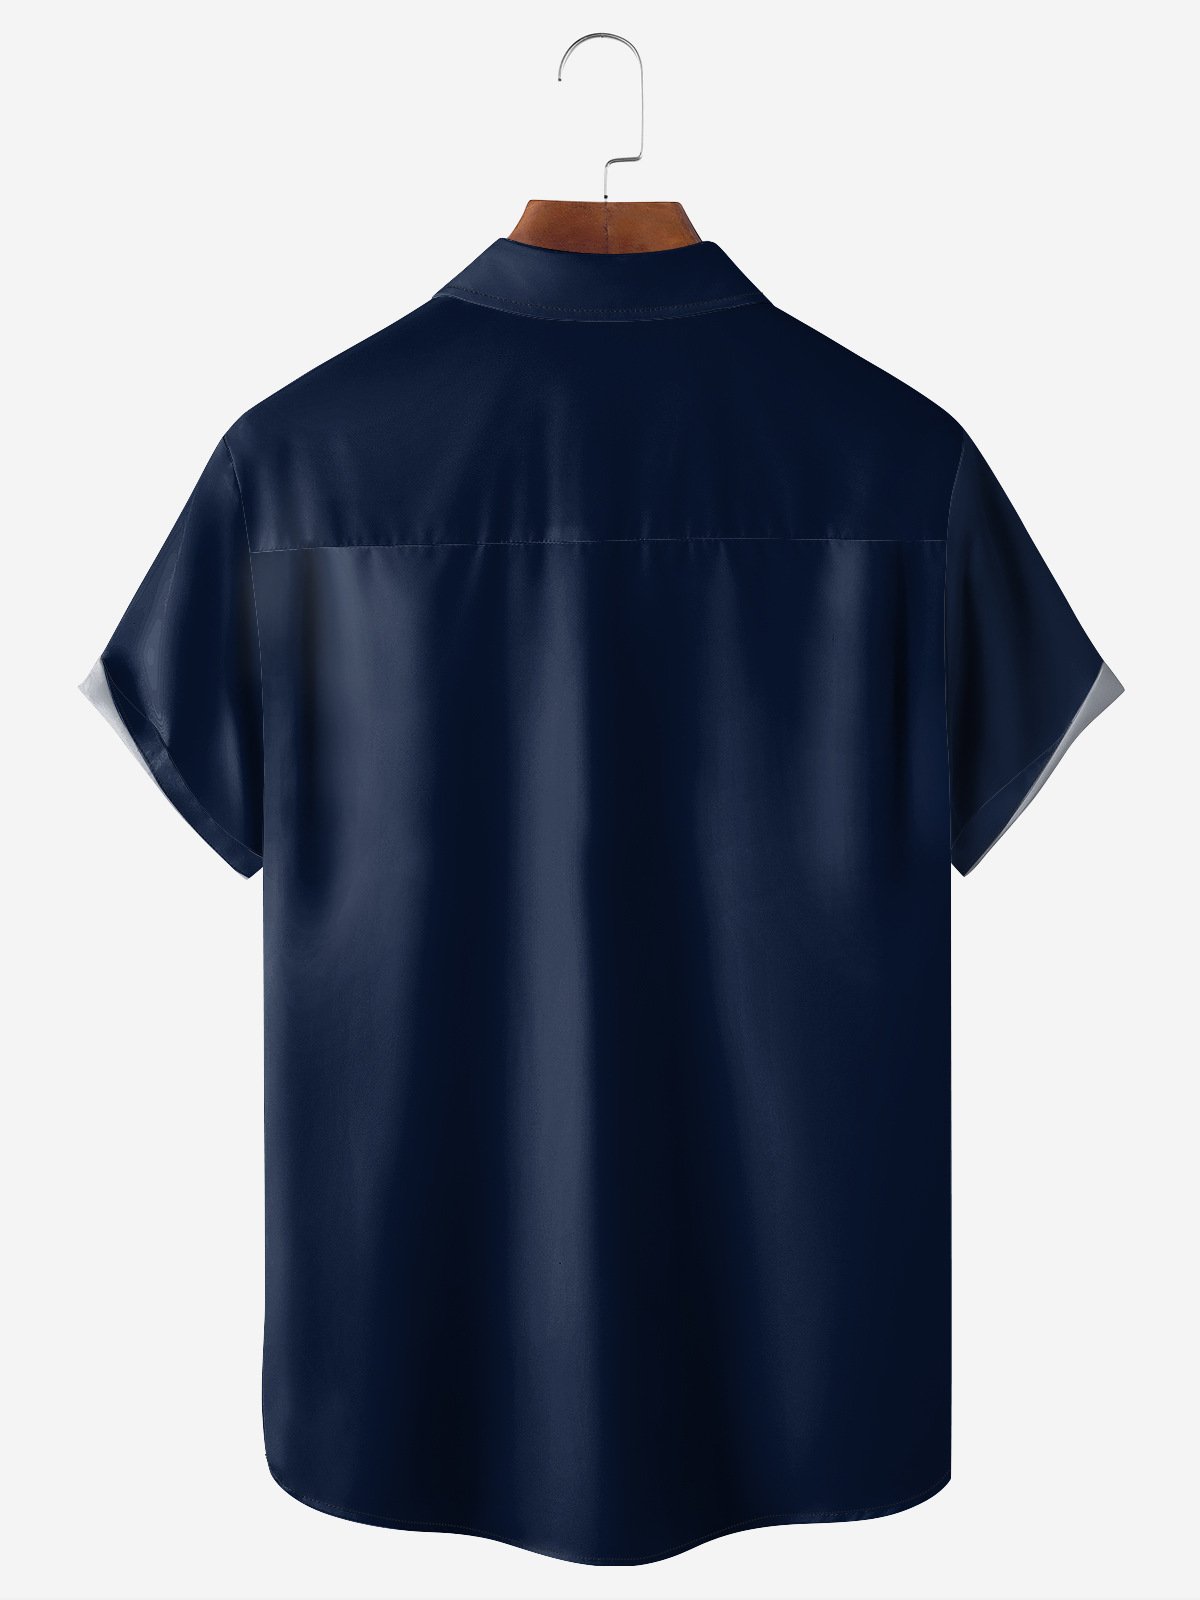 Hardaddy Football Chest Pocket Short Sleeve Bowling Shirt